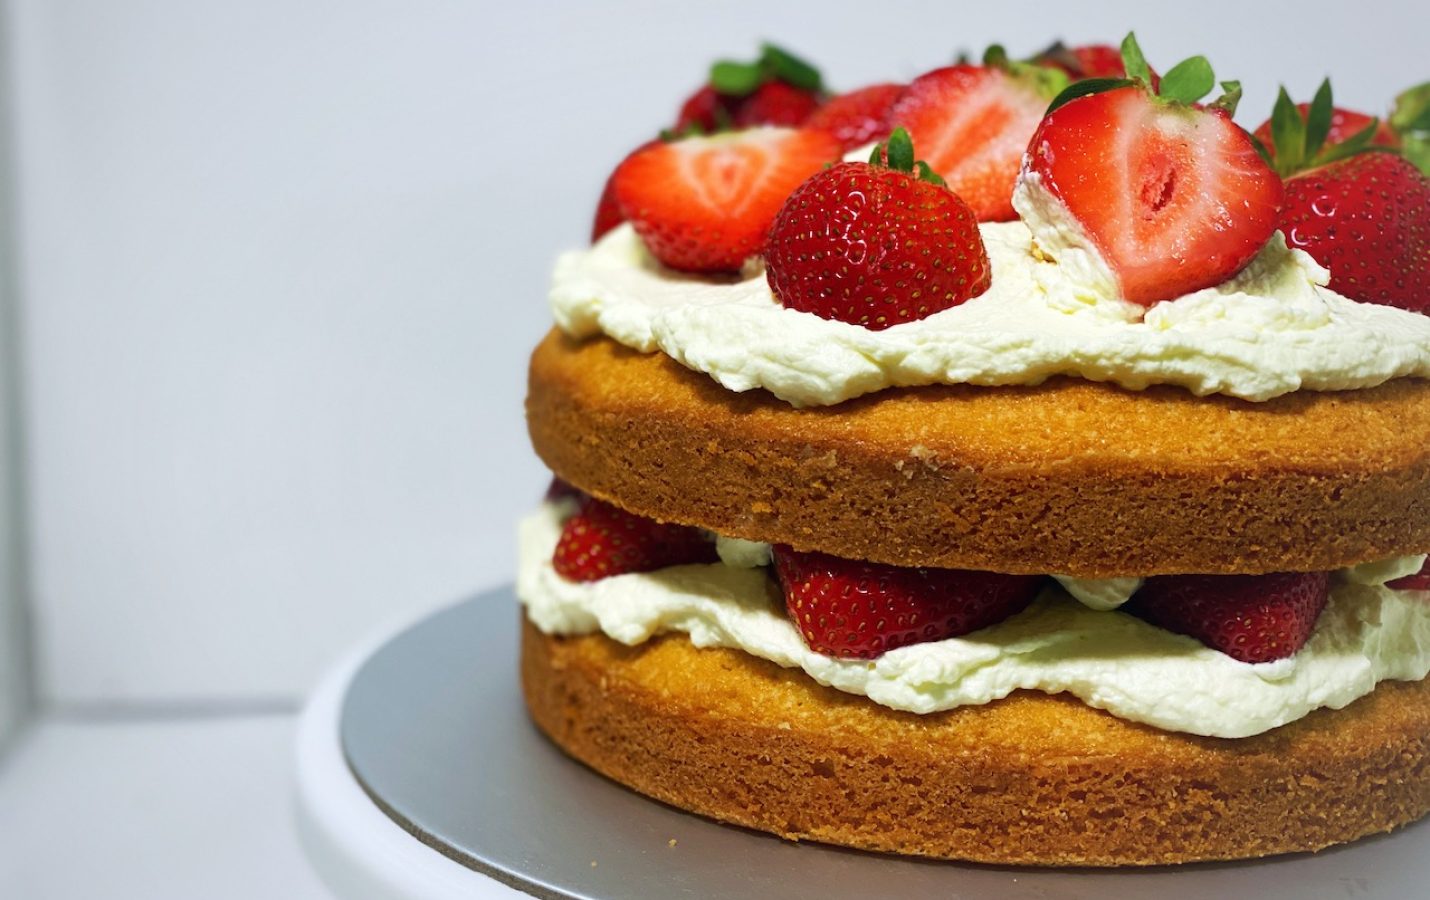 Classic Victoria Sponge Cake with cream and fresh strawberries